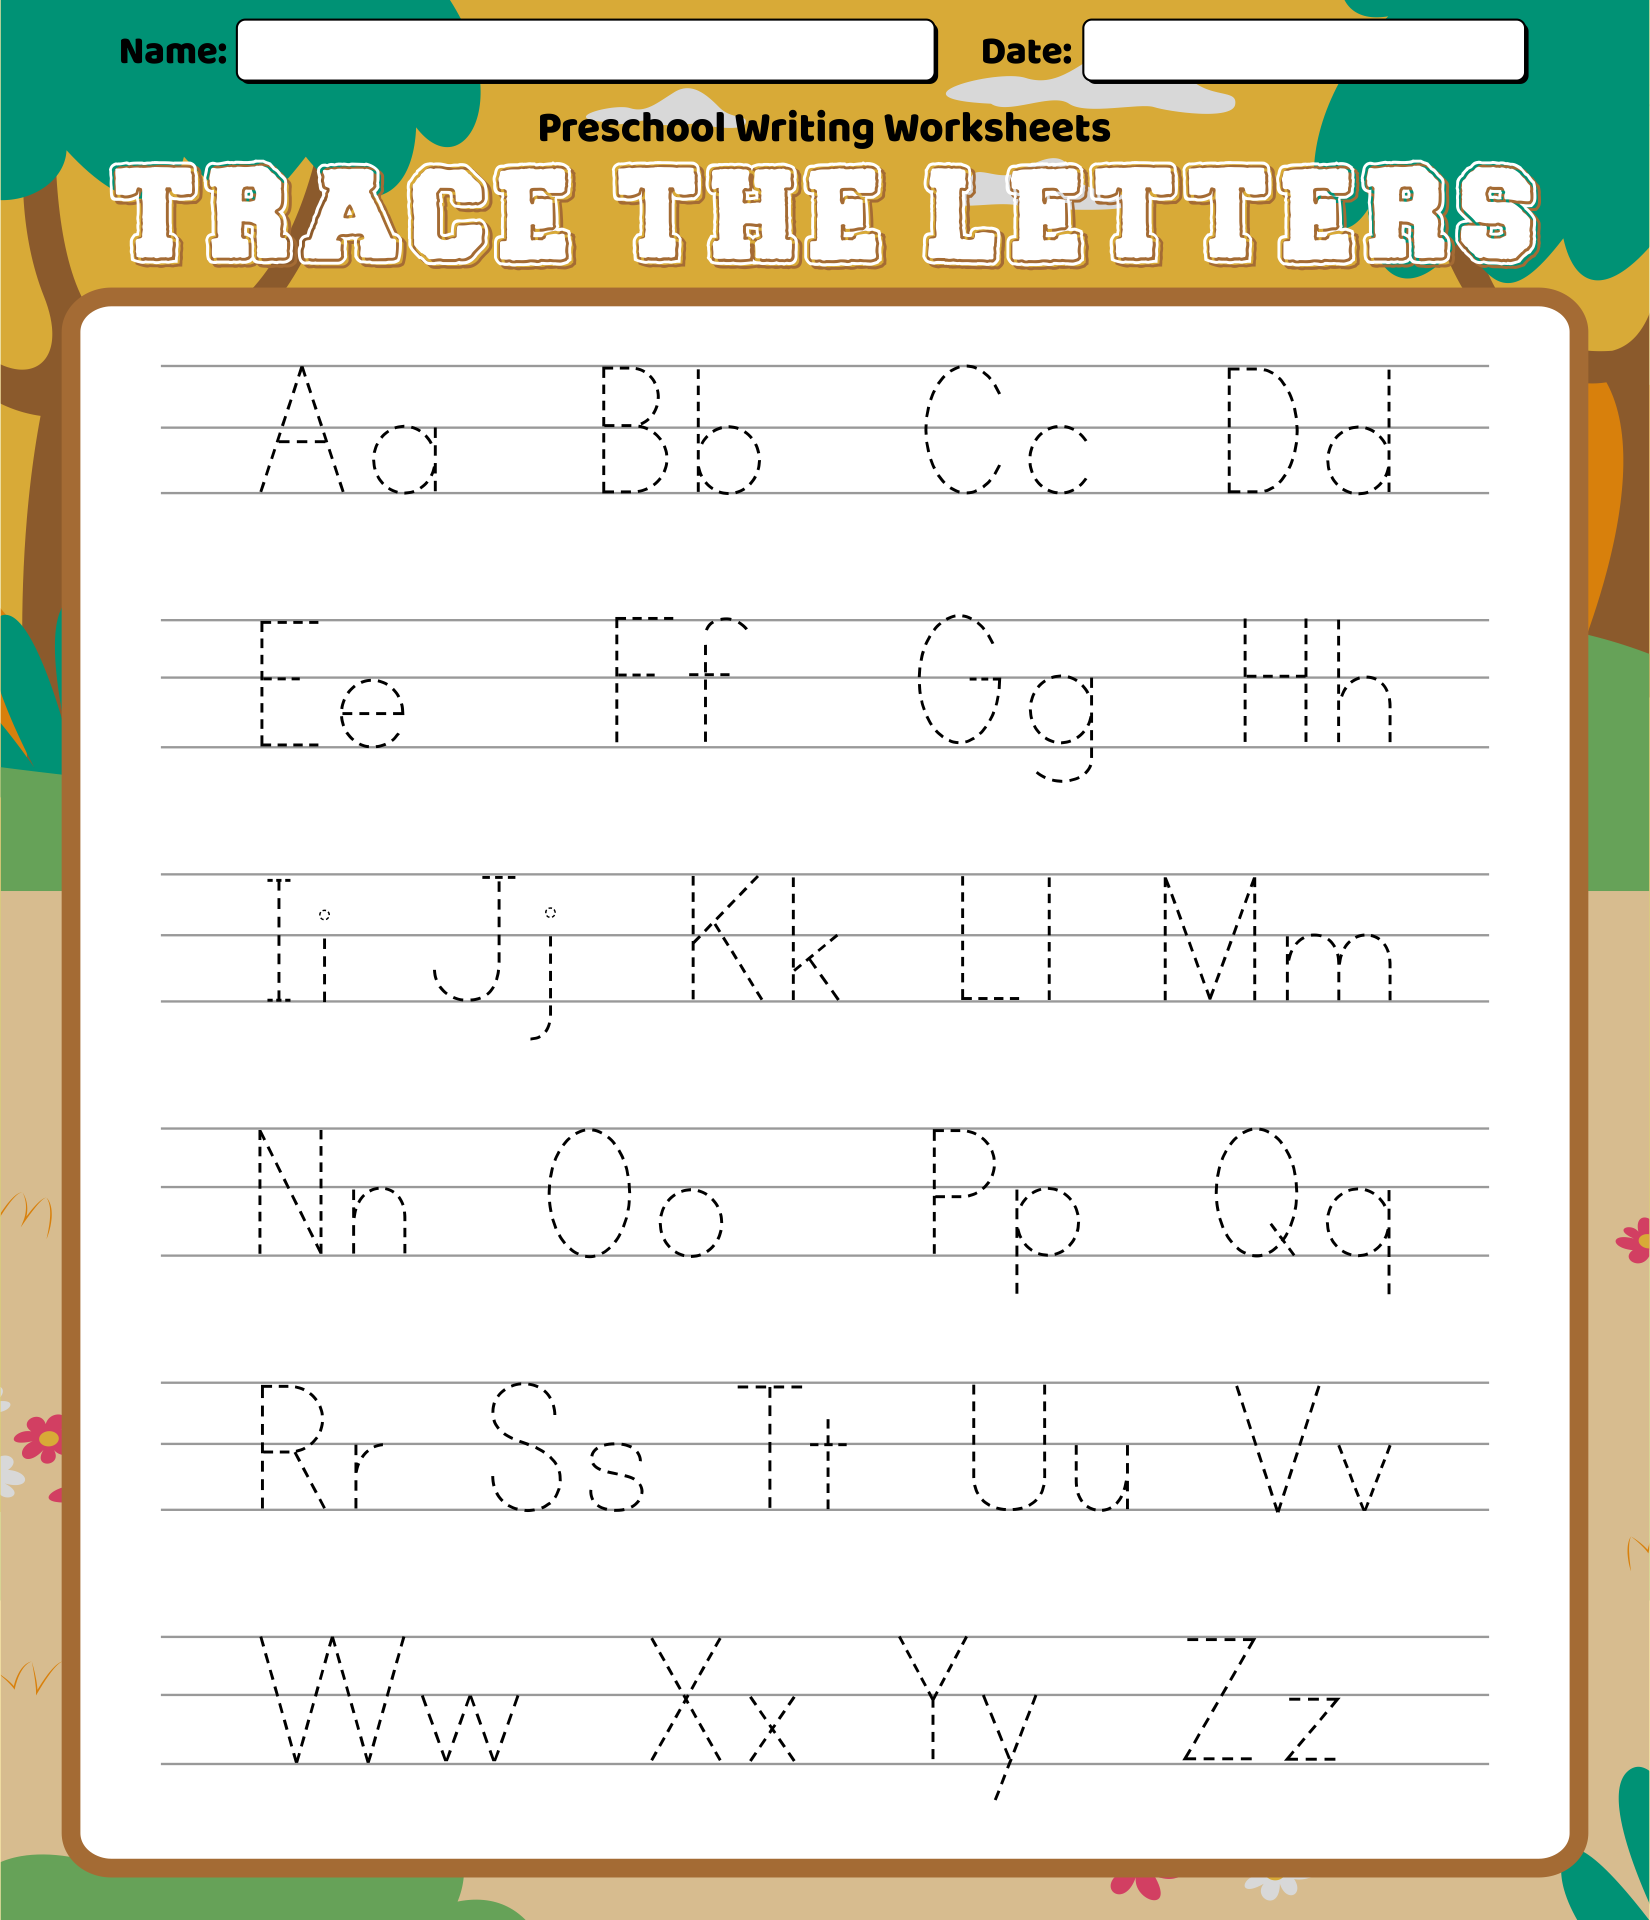 7 Best Images of Preschool Writing Worksheets Free Printable Letters